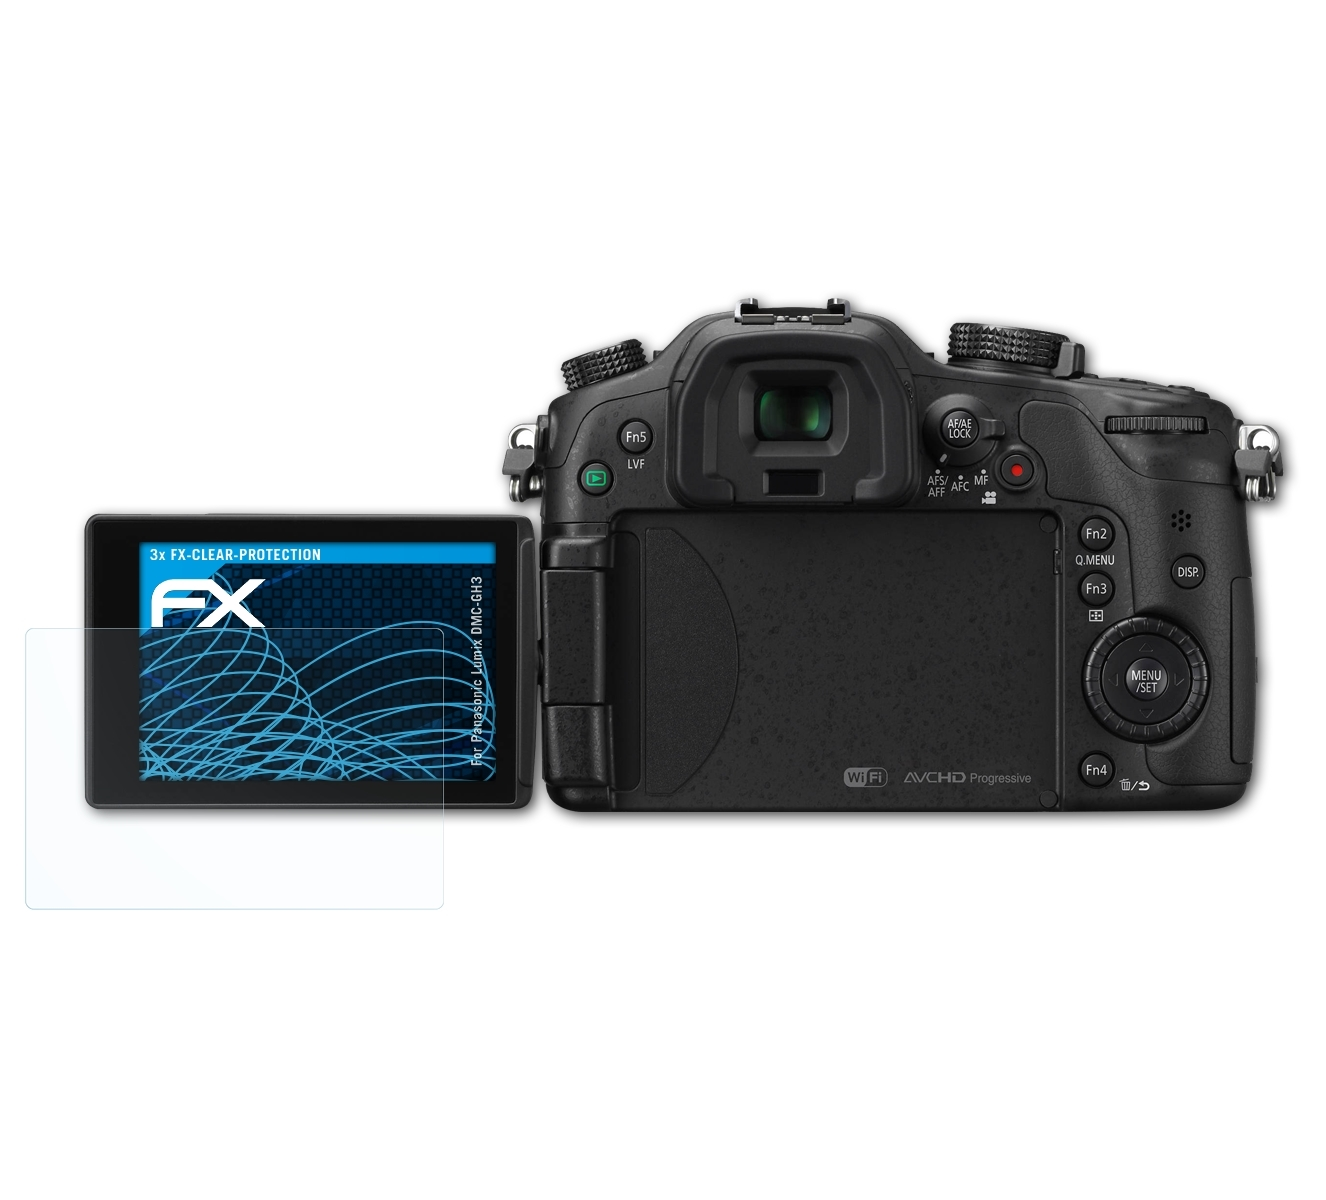 FX-Clear DMC-GH3) Panasonic Displayschutz(für ATFOLIX Lumix 3x